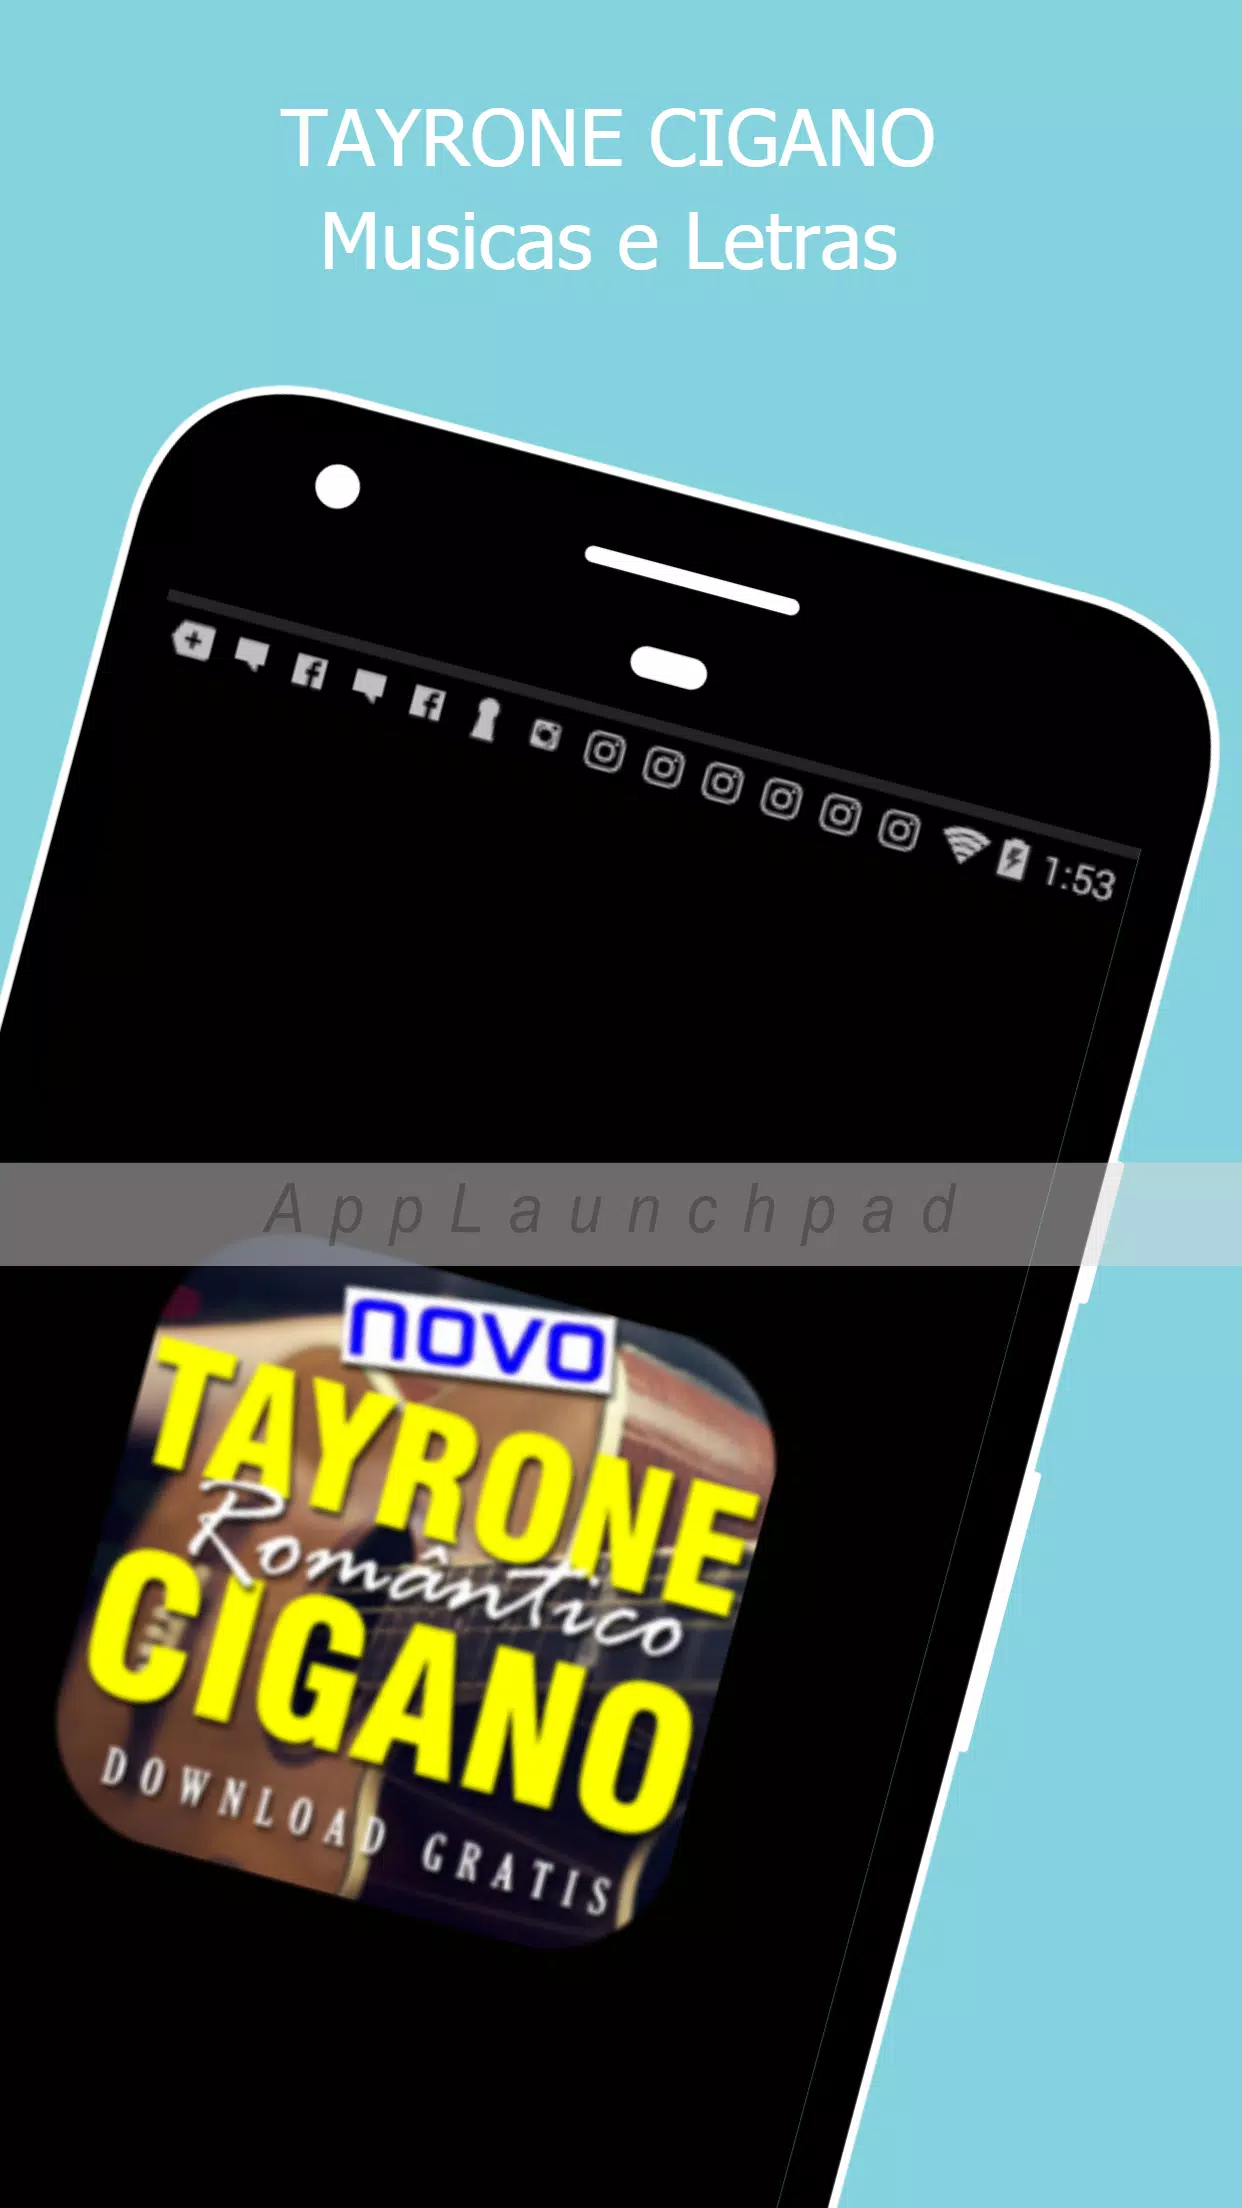 TAYRONE CIGANO 2018 sua musica novo palco mp3 APK pour Android Télécharger